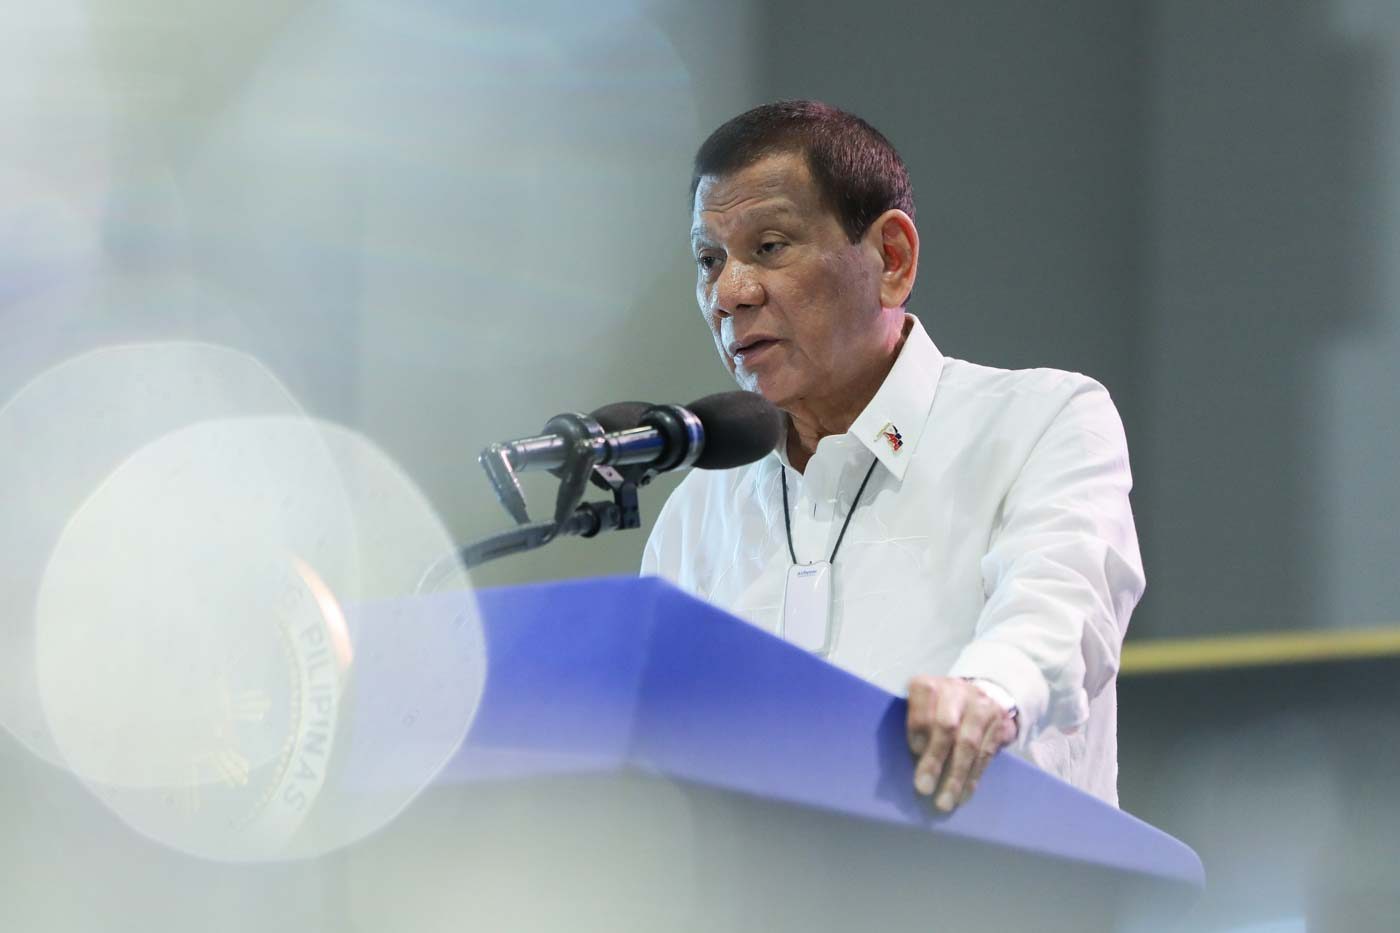 ‘Travel with me around PH,’ Duterte tells Filipinos amid tourism slump over coronavirus fears